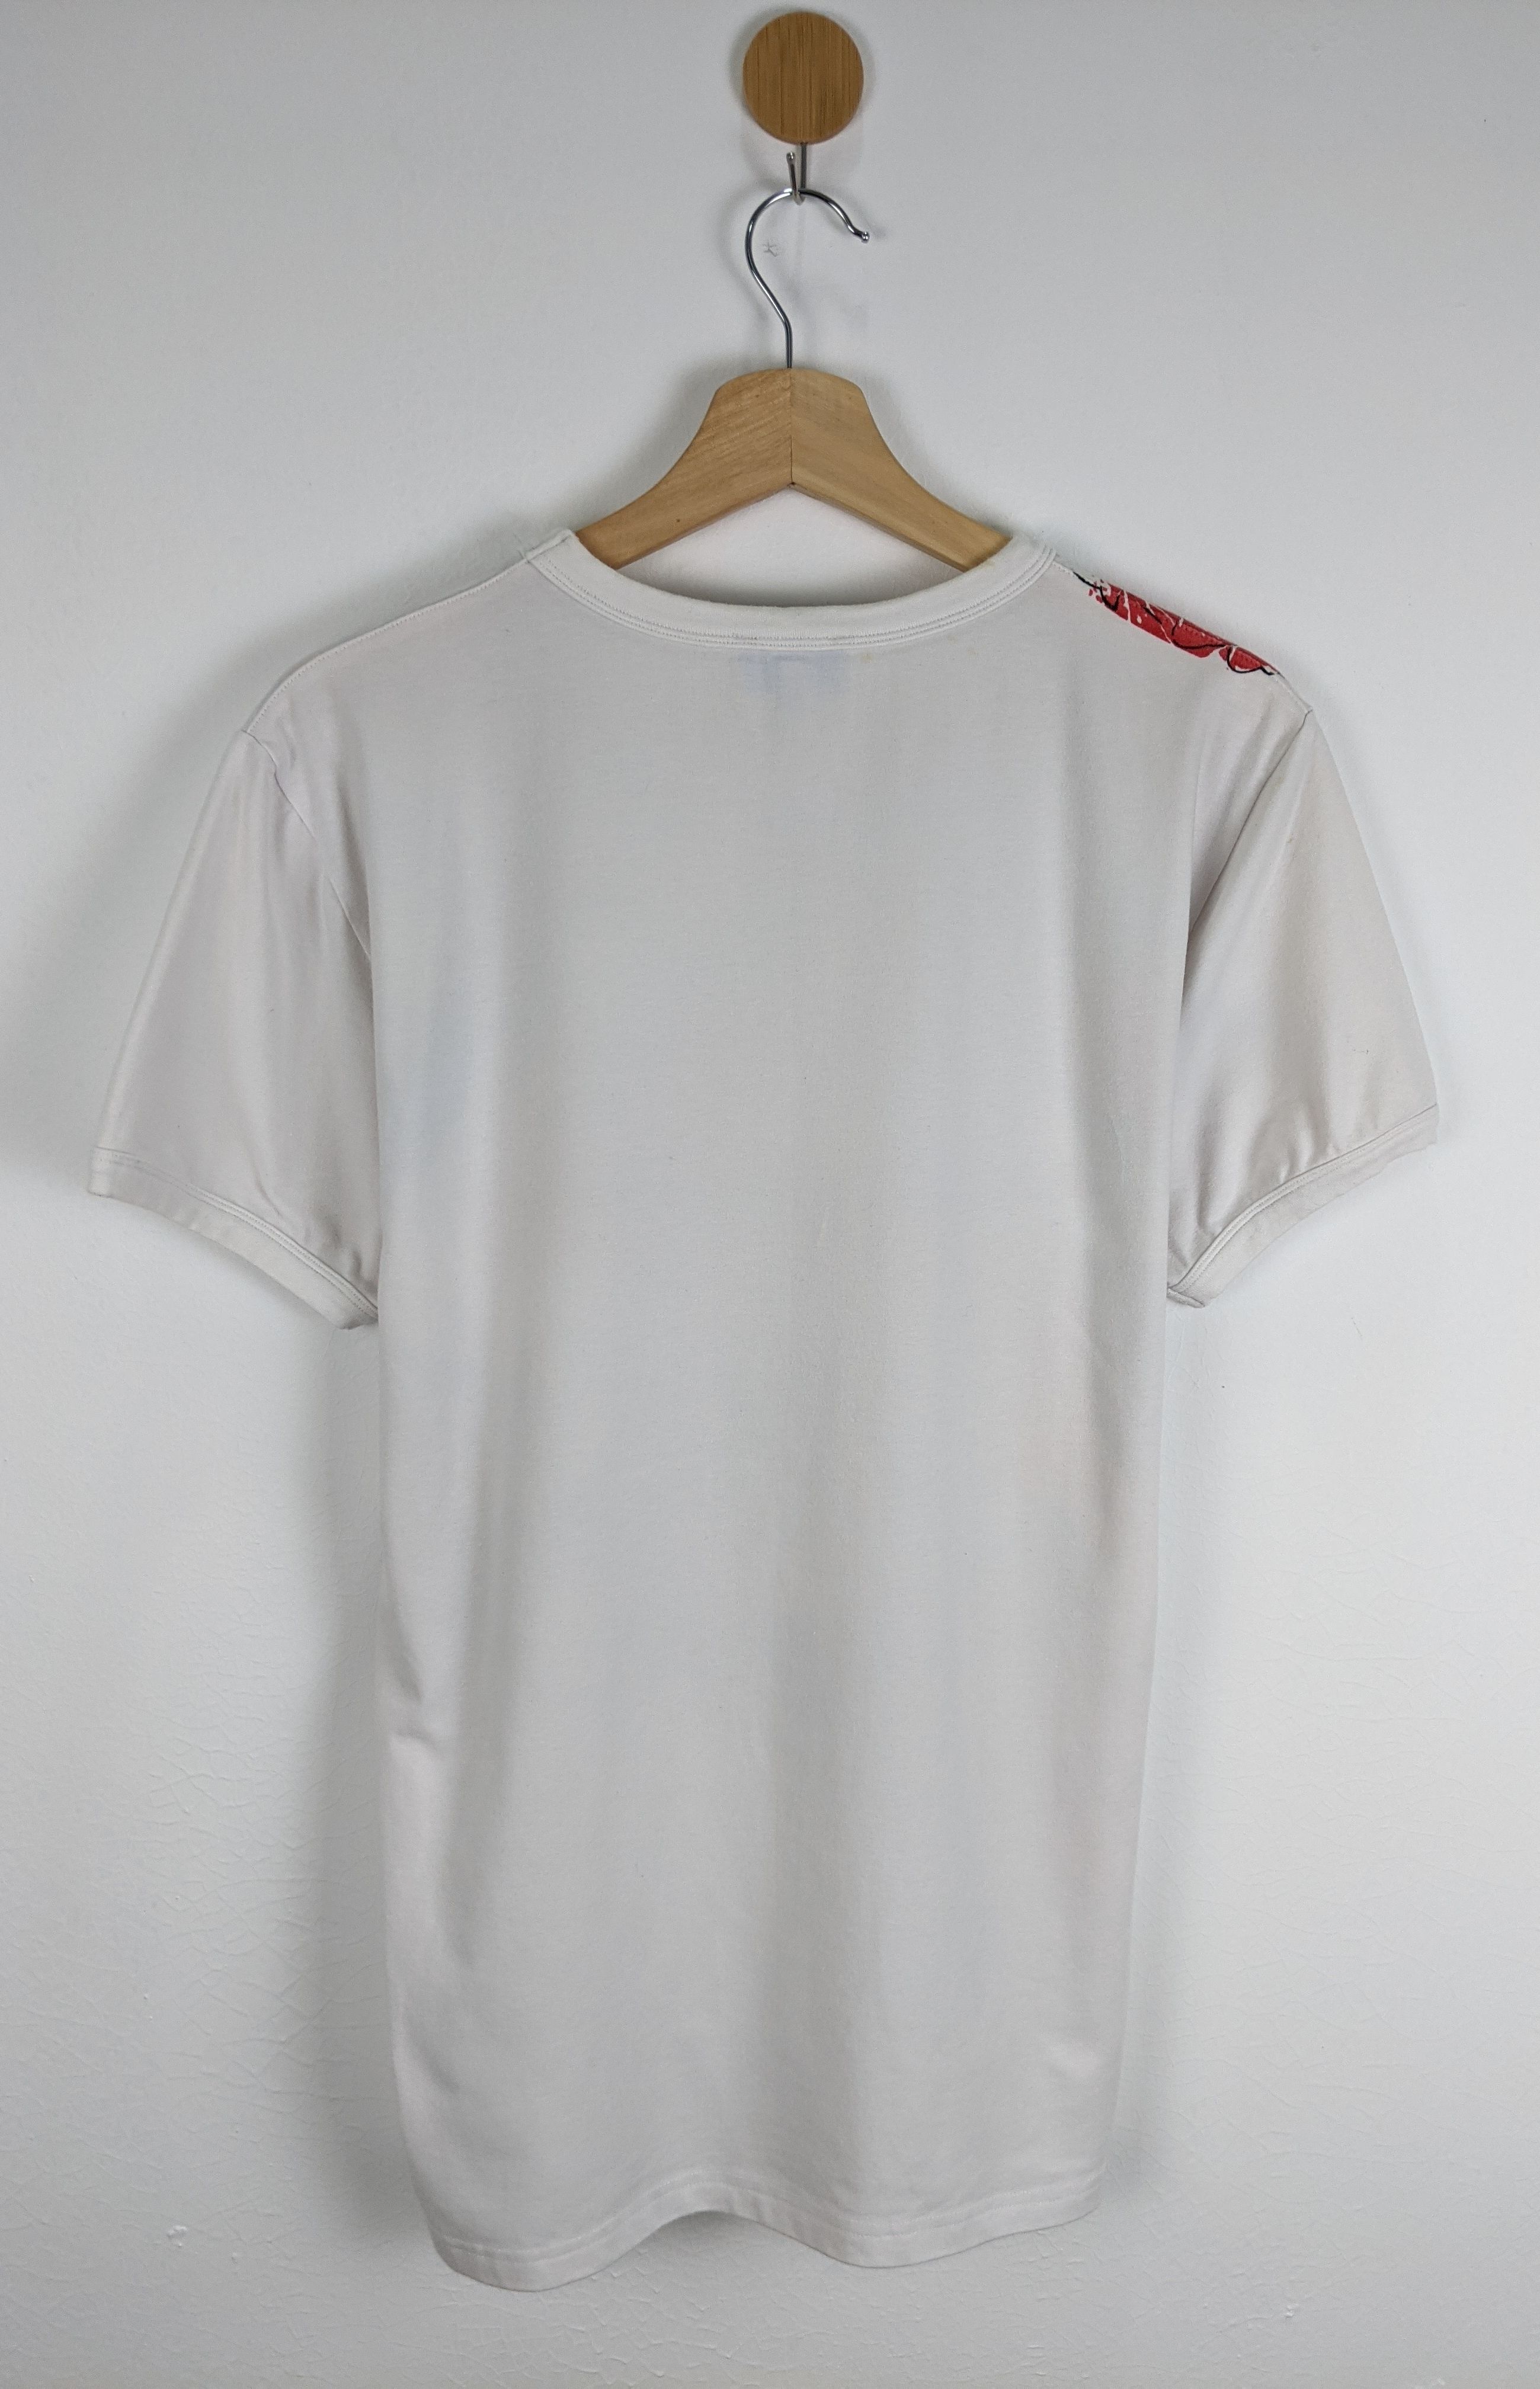 Vivienne Westwood Man Roses Shirt - 3